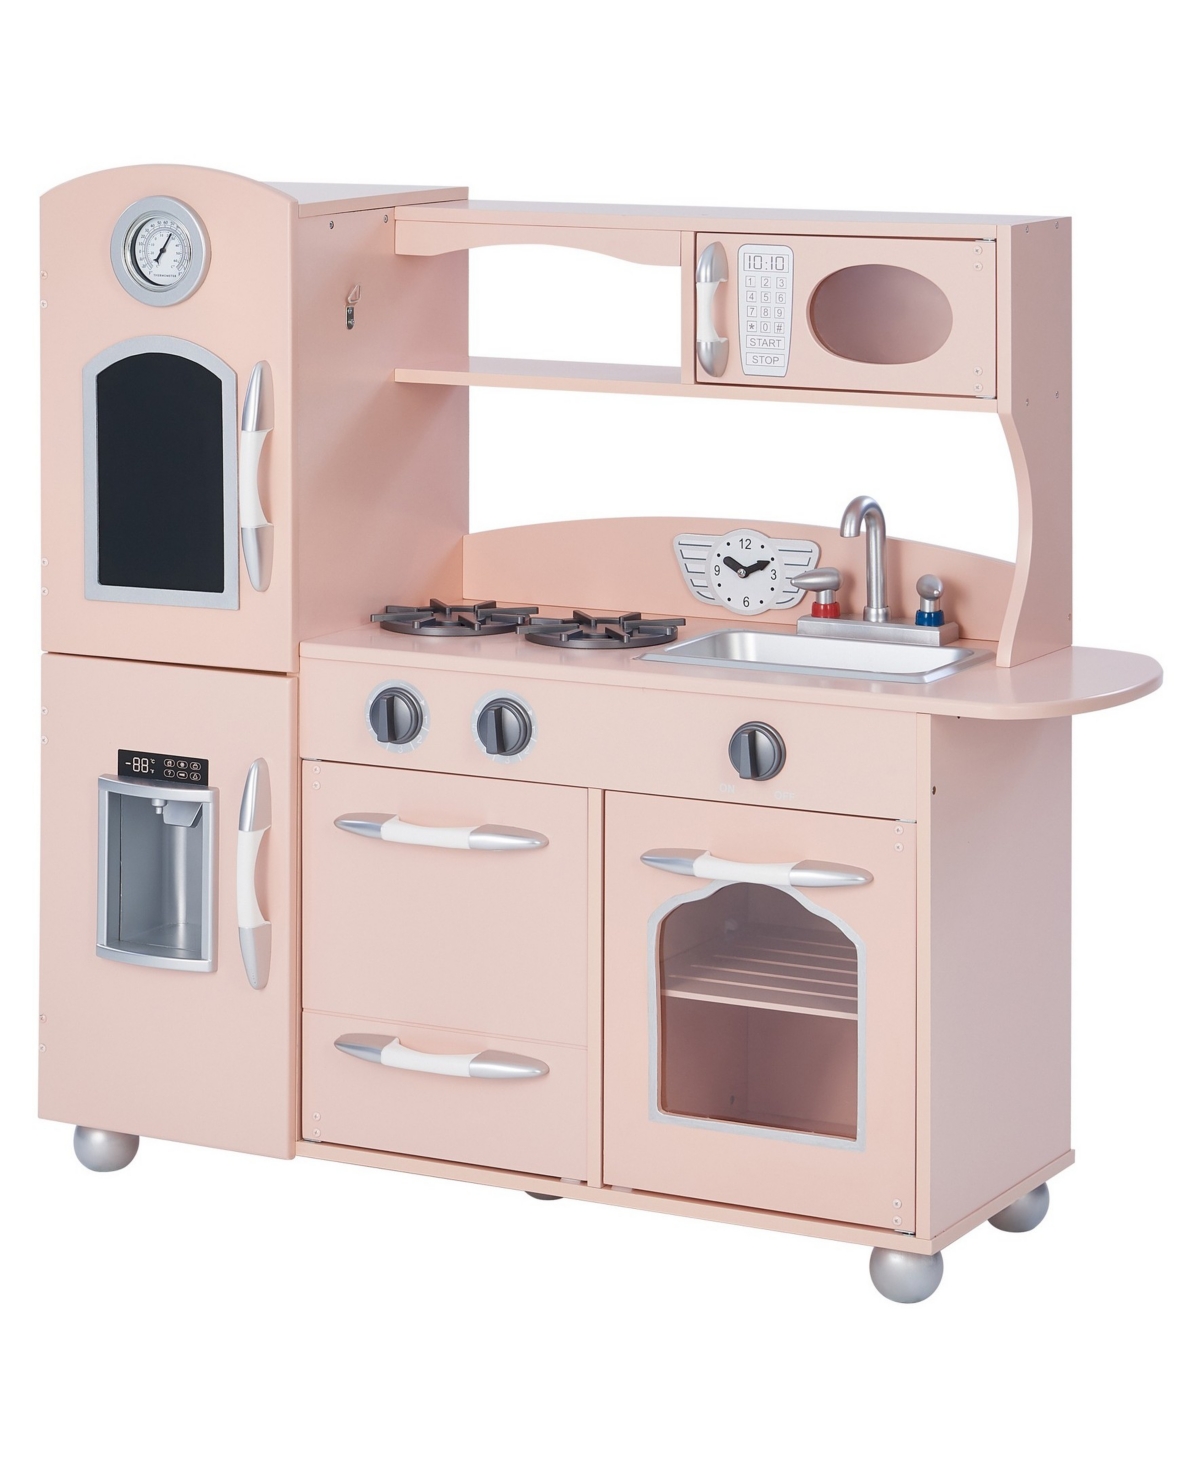 Teamson -little Chef Westchester Retro Play Kitchen In Pink